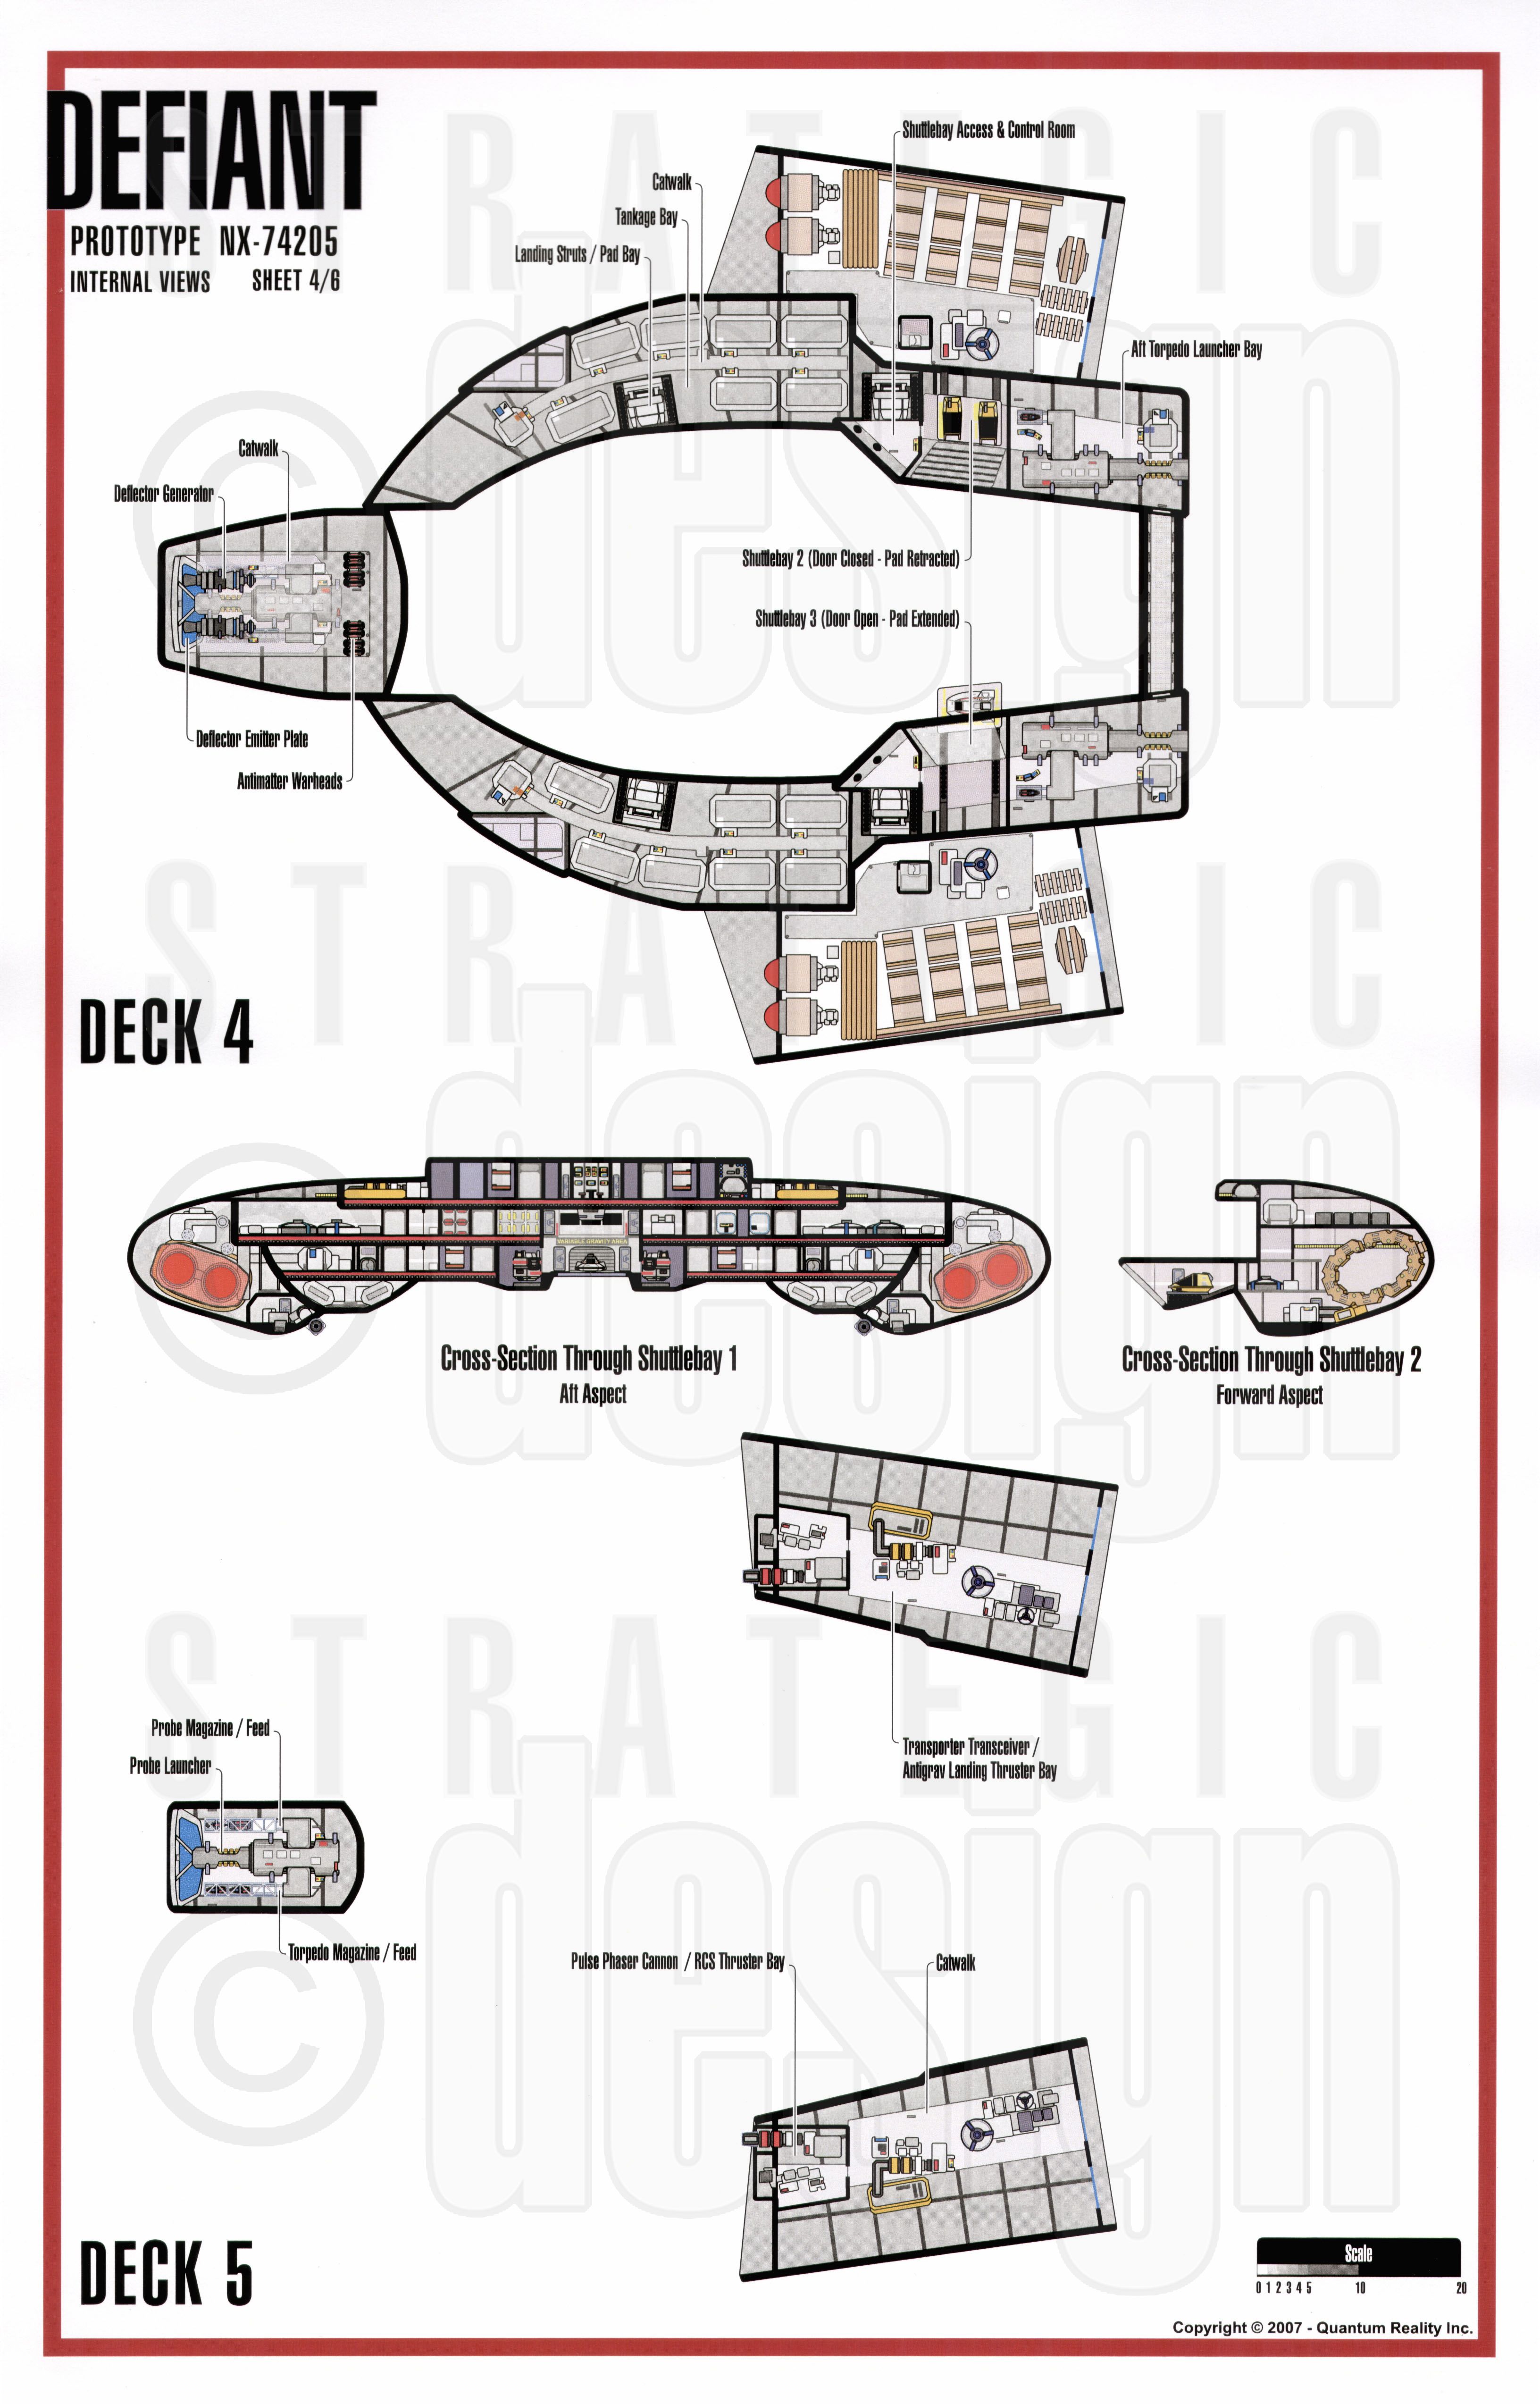 Defiant Class Starship Deck Plans